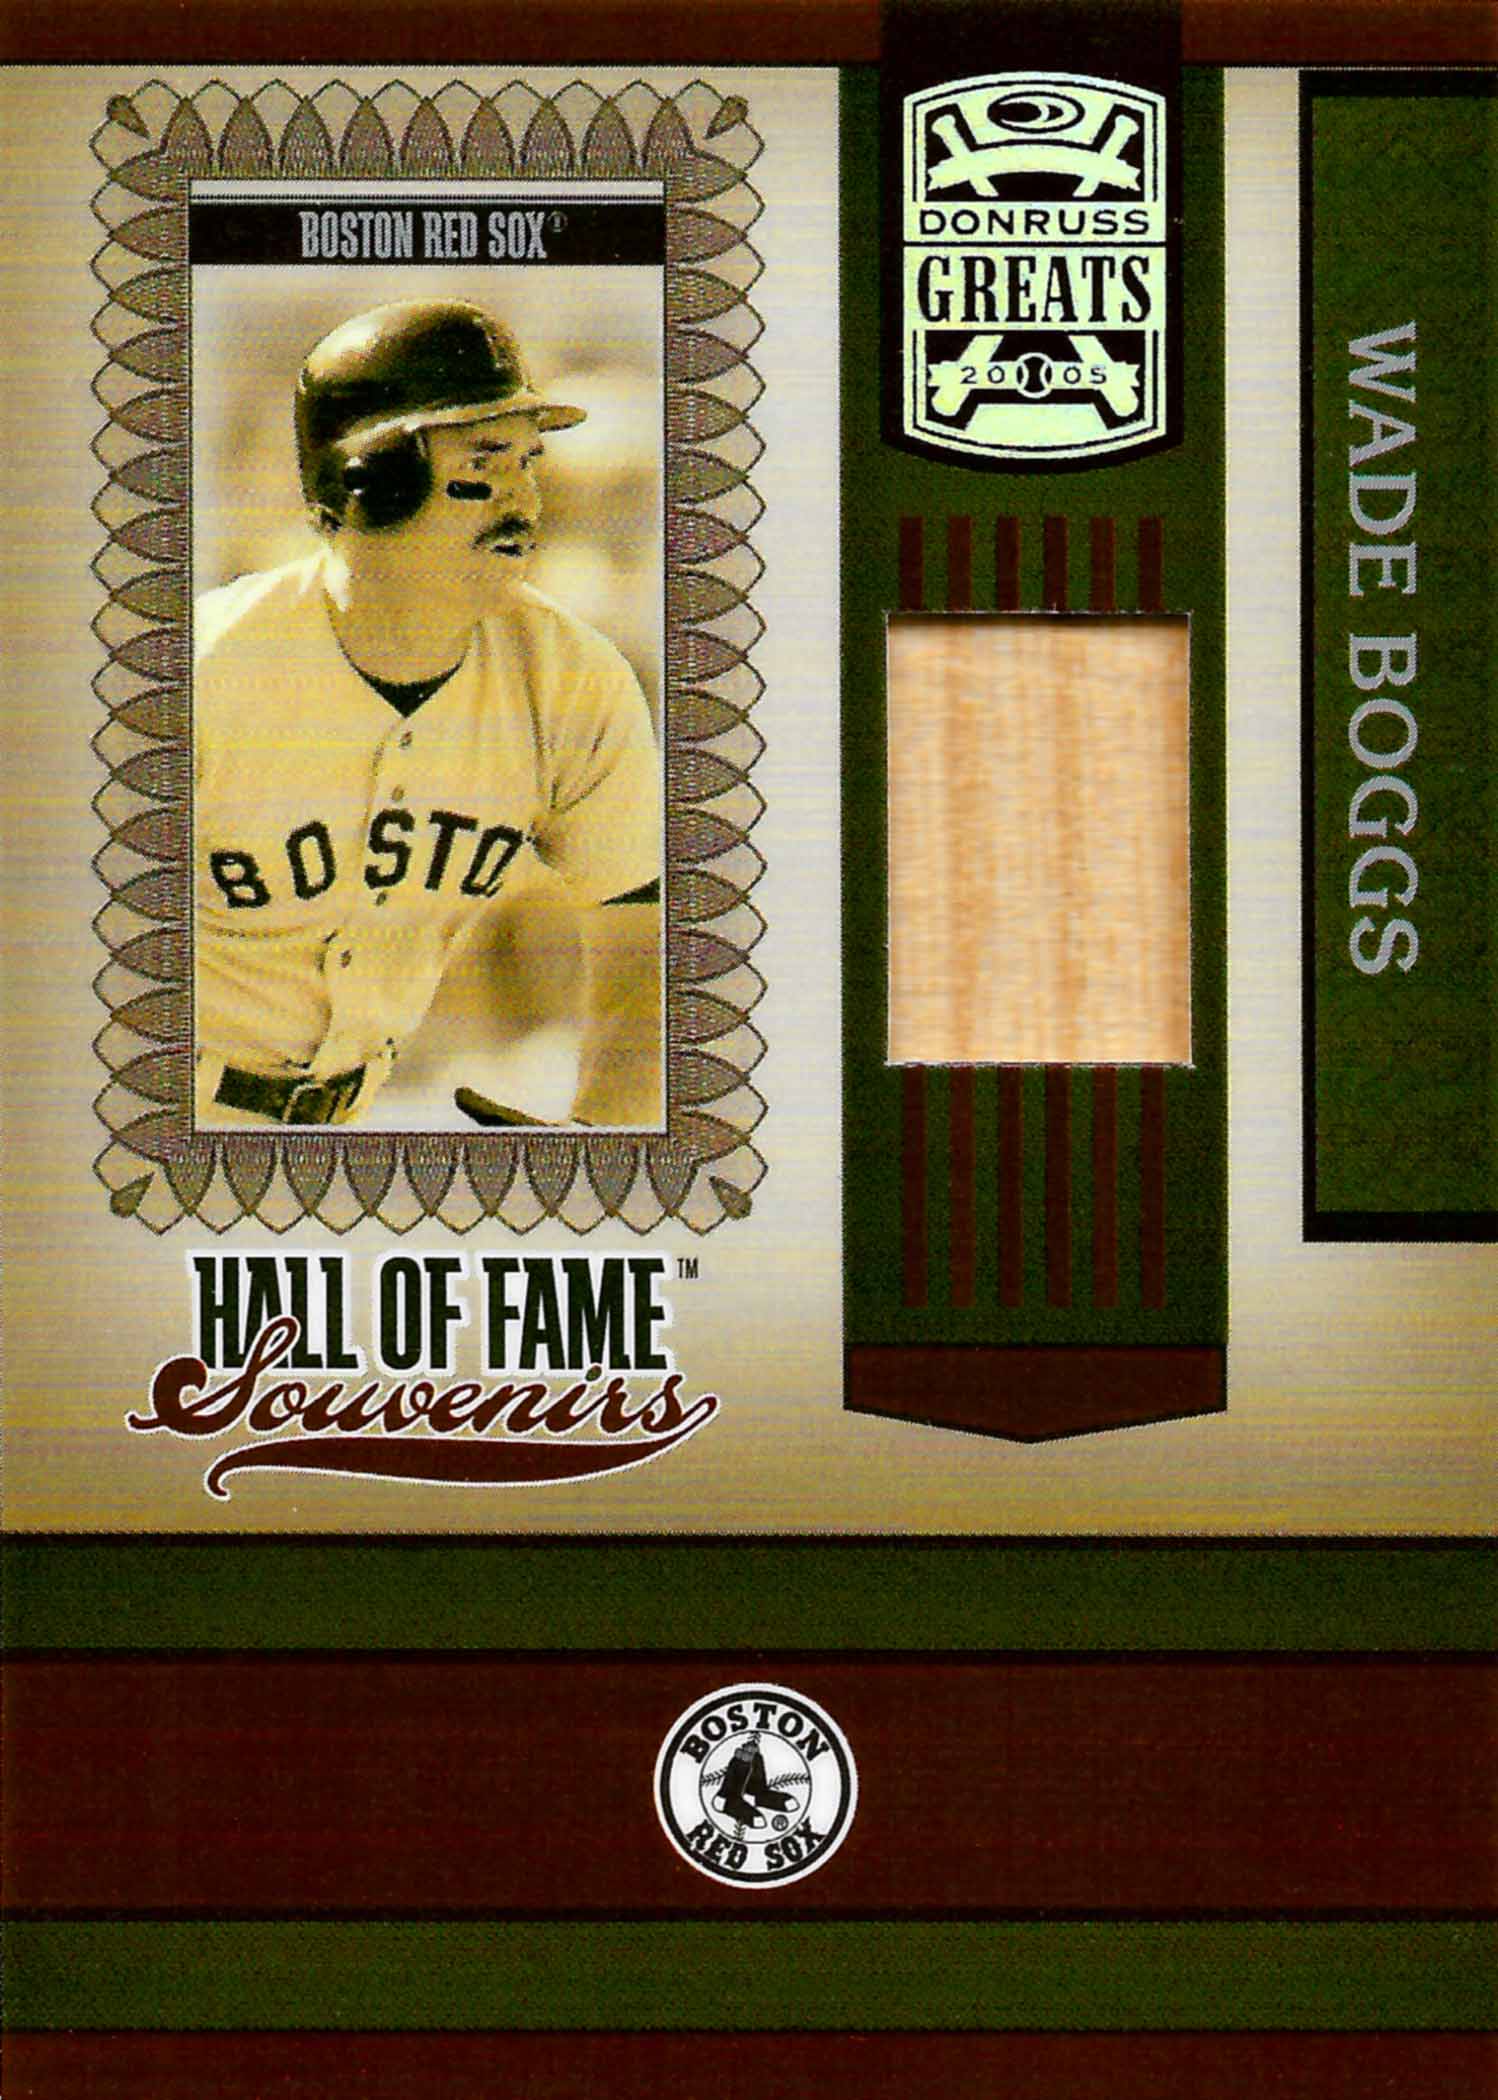 2005 Donruss Greats Hall of Fame Souvenirs Material Bat